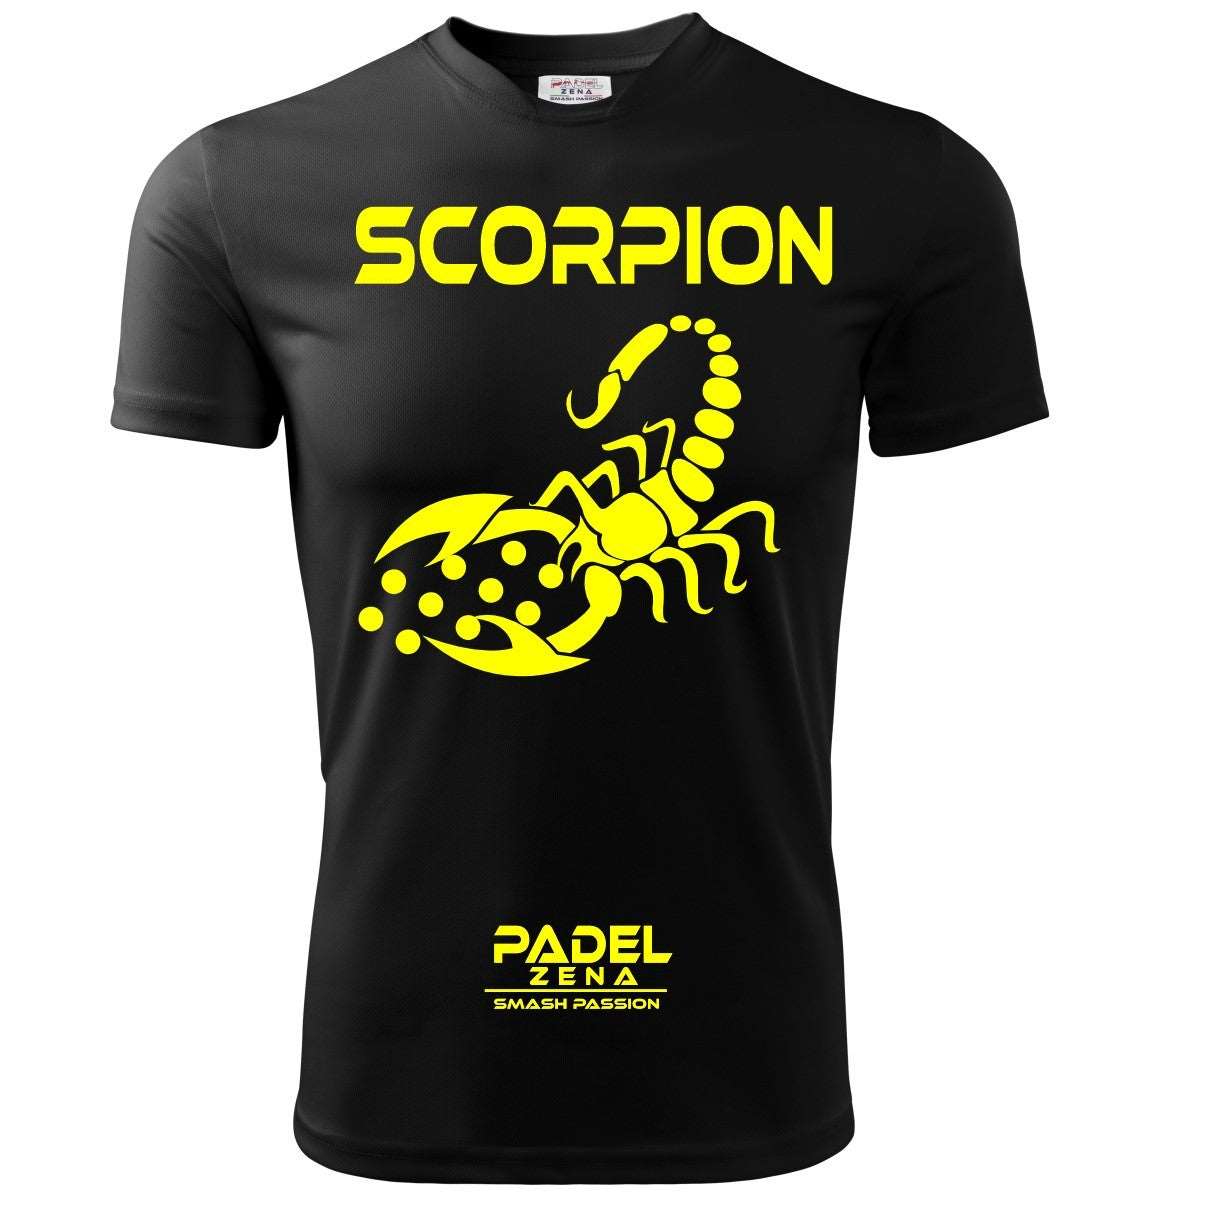 Padel Scorpion